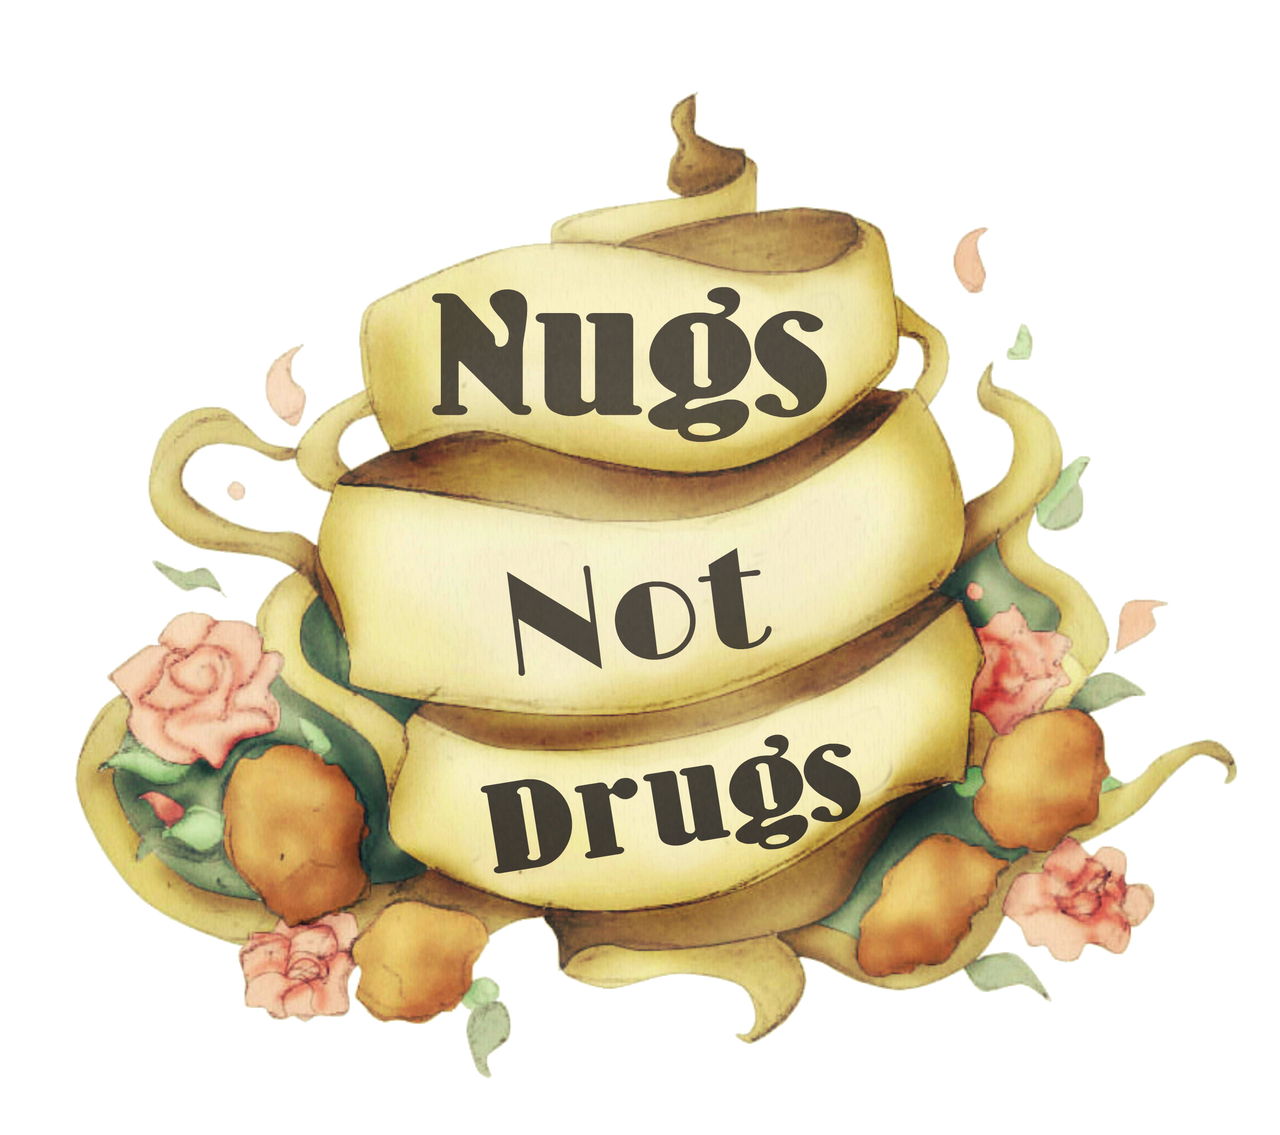 Chicken Nugget Tattoo - Nugs Not Drugs!